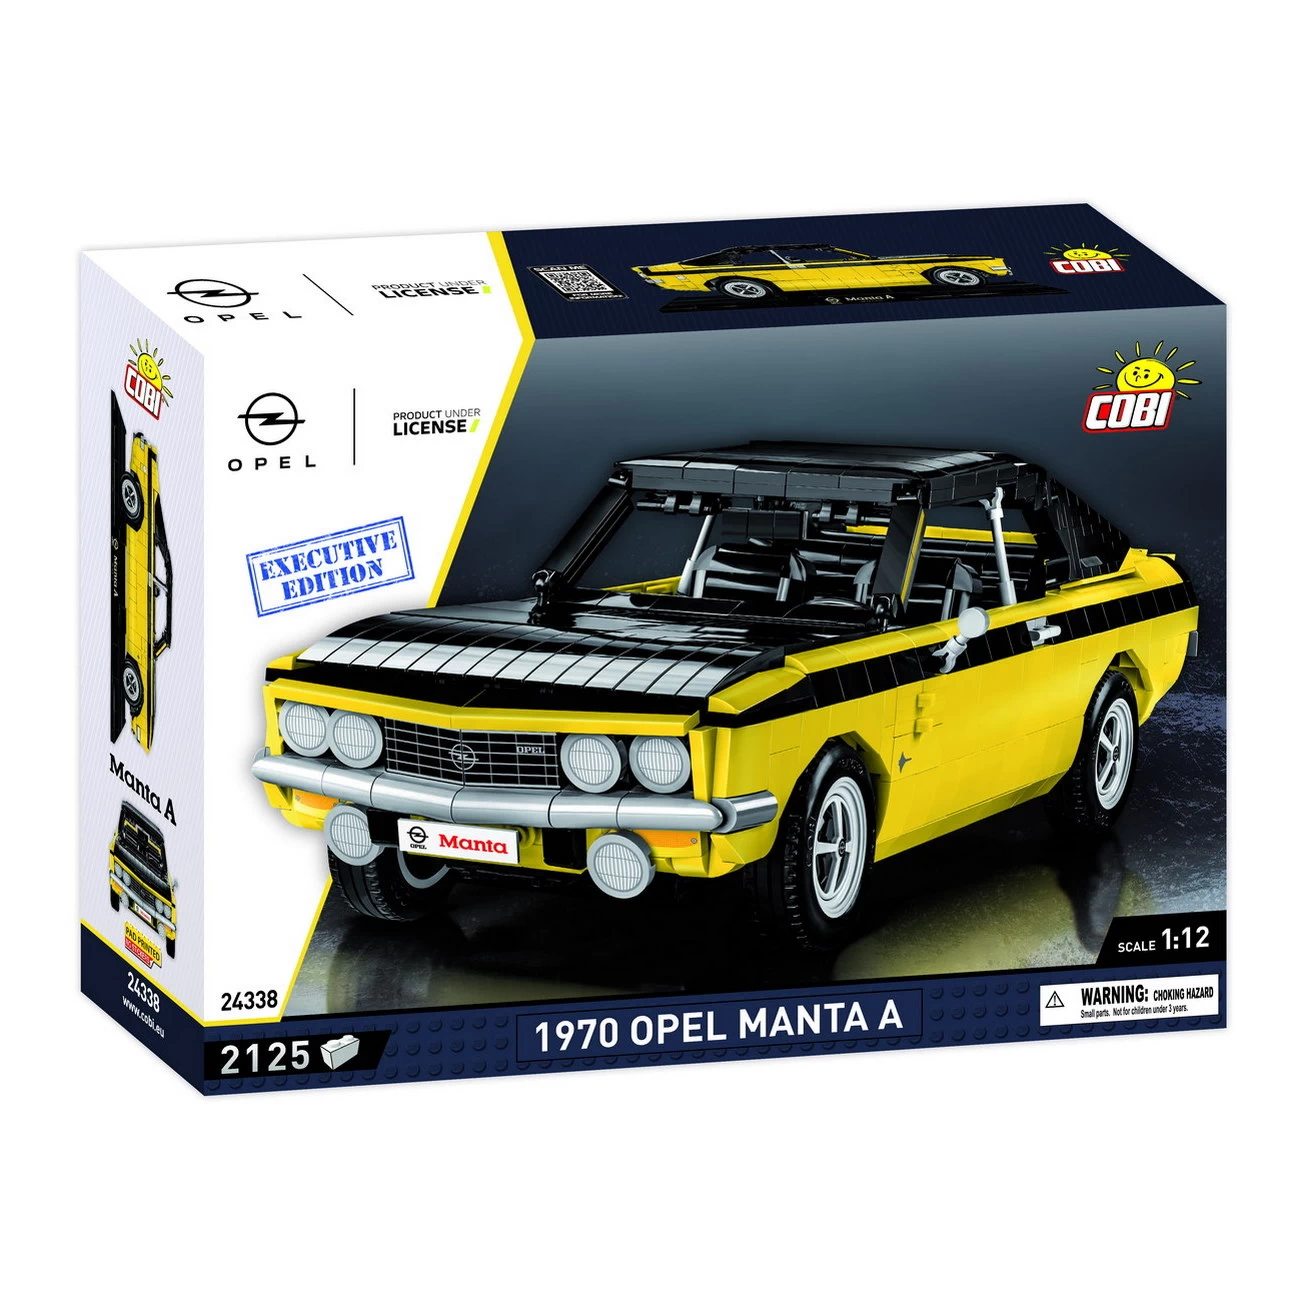 COBI - 1970 Opel Manta A (24338) - Executive Edition